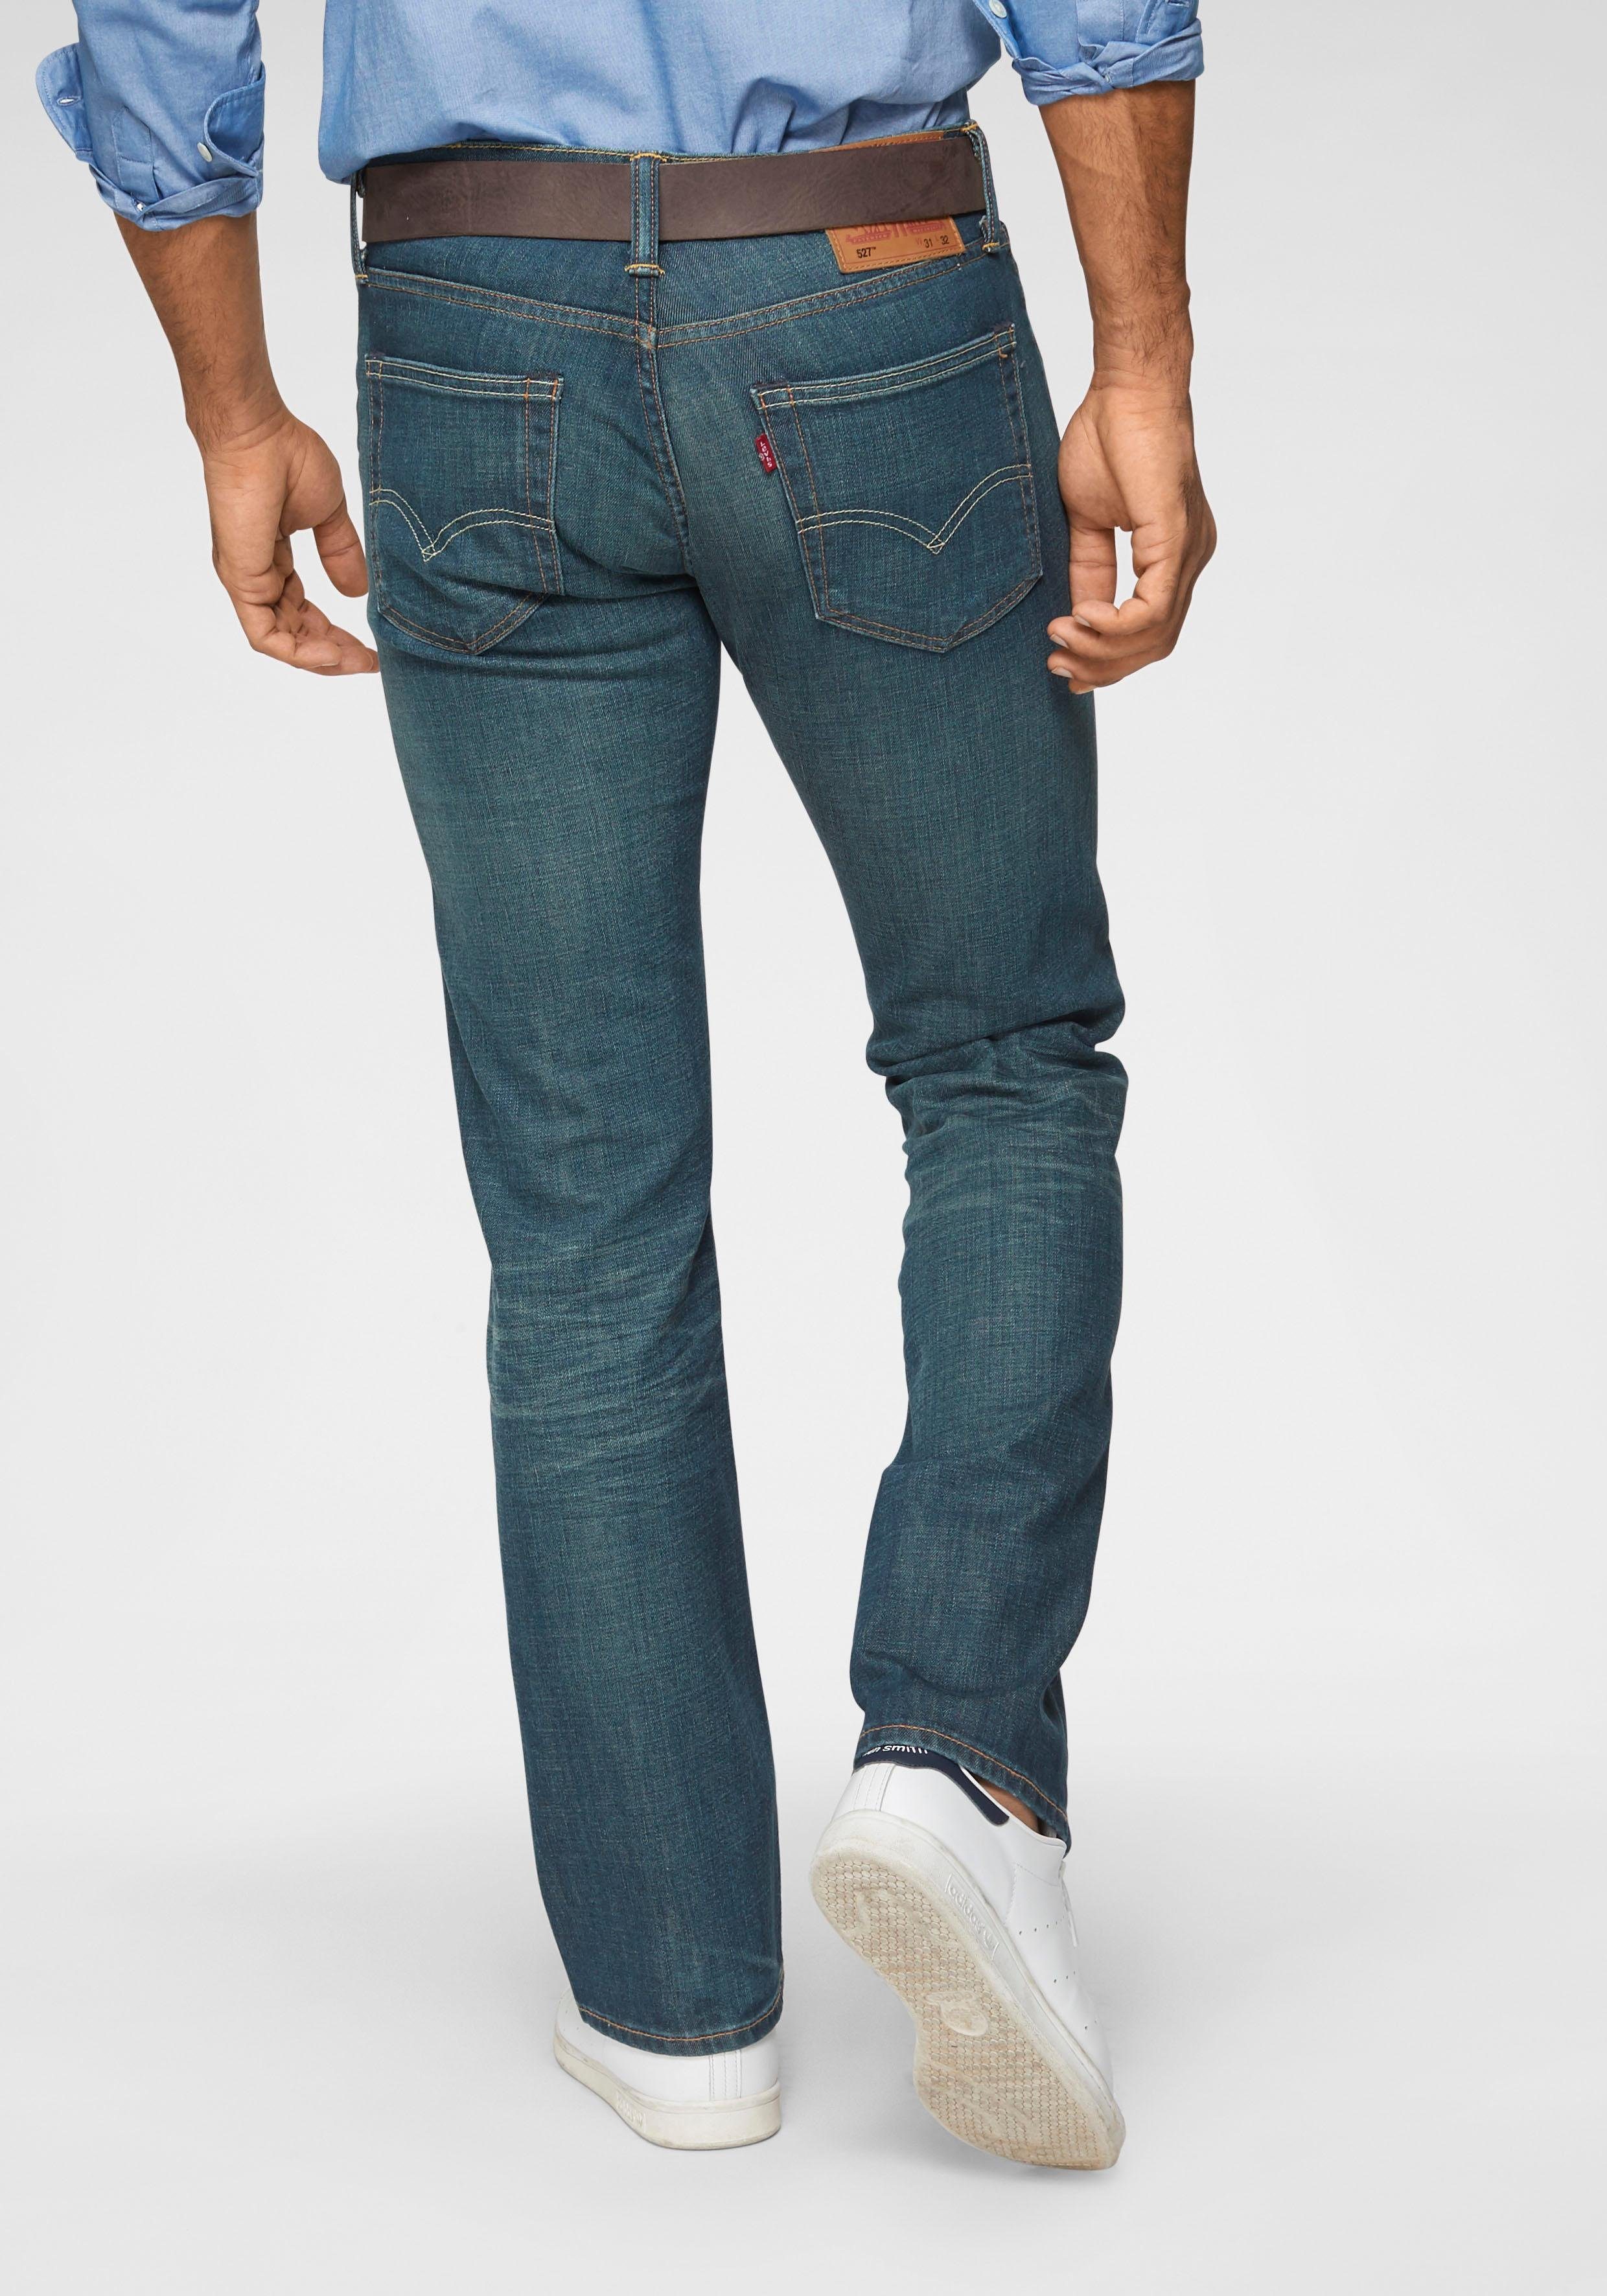 Dragende cirkel twaalf overdrijving Levi's® Bootcut jeans 527™ online bestellen | OTTO